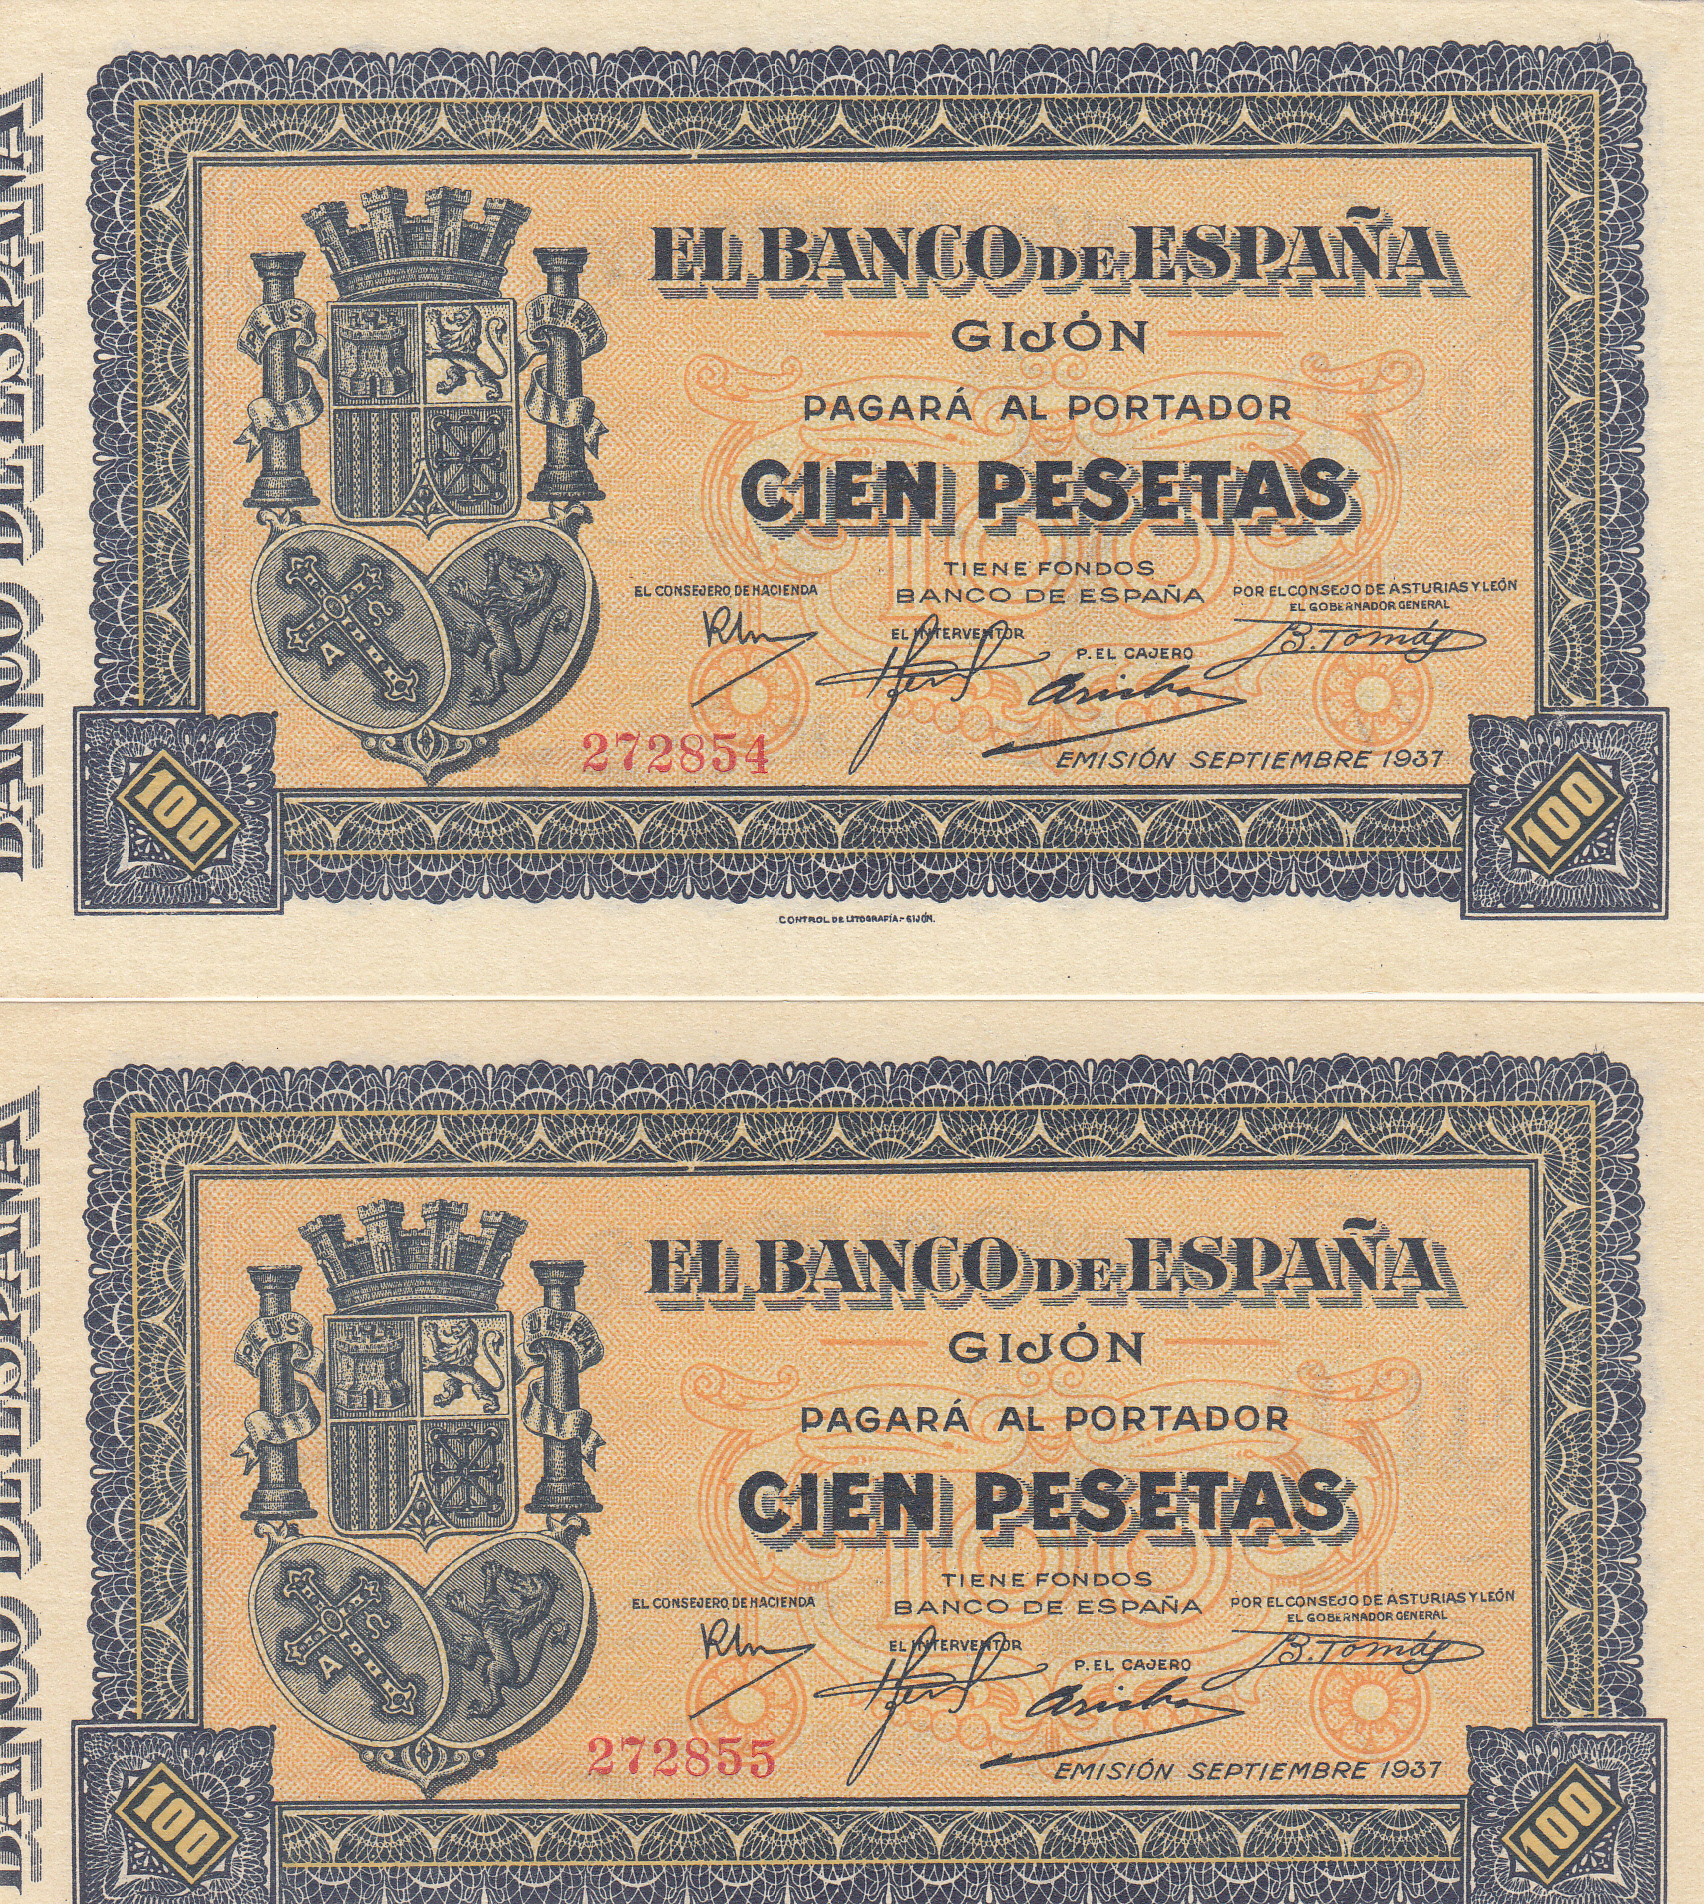 CRBL0095 PAREJA CORRELATIVA BILLETES ESPAÑA 100 PESETAS DE GIJON 1937 SIN CIRCULAR